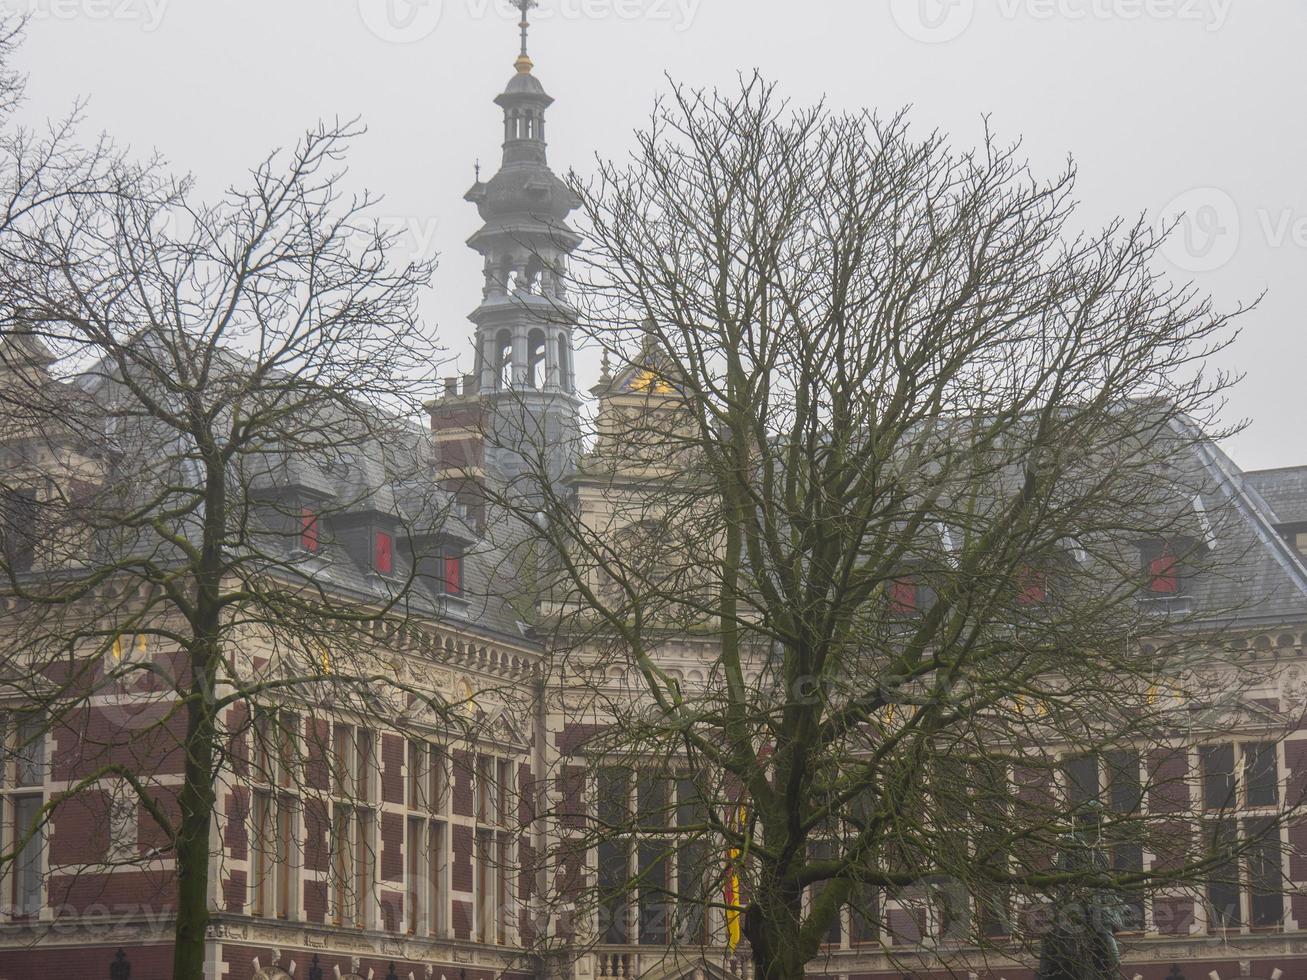 utrecht città nei Paesi Bassi foto